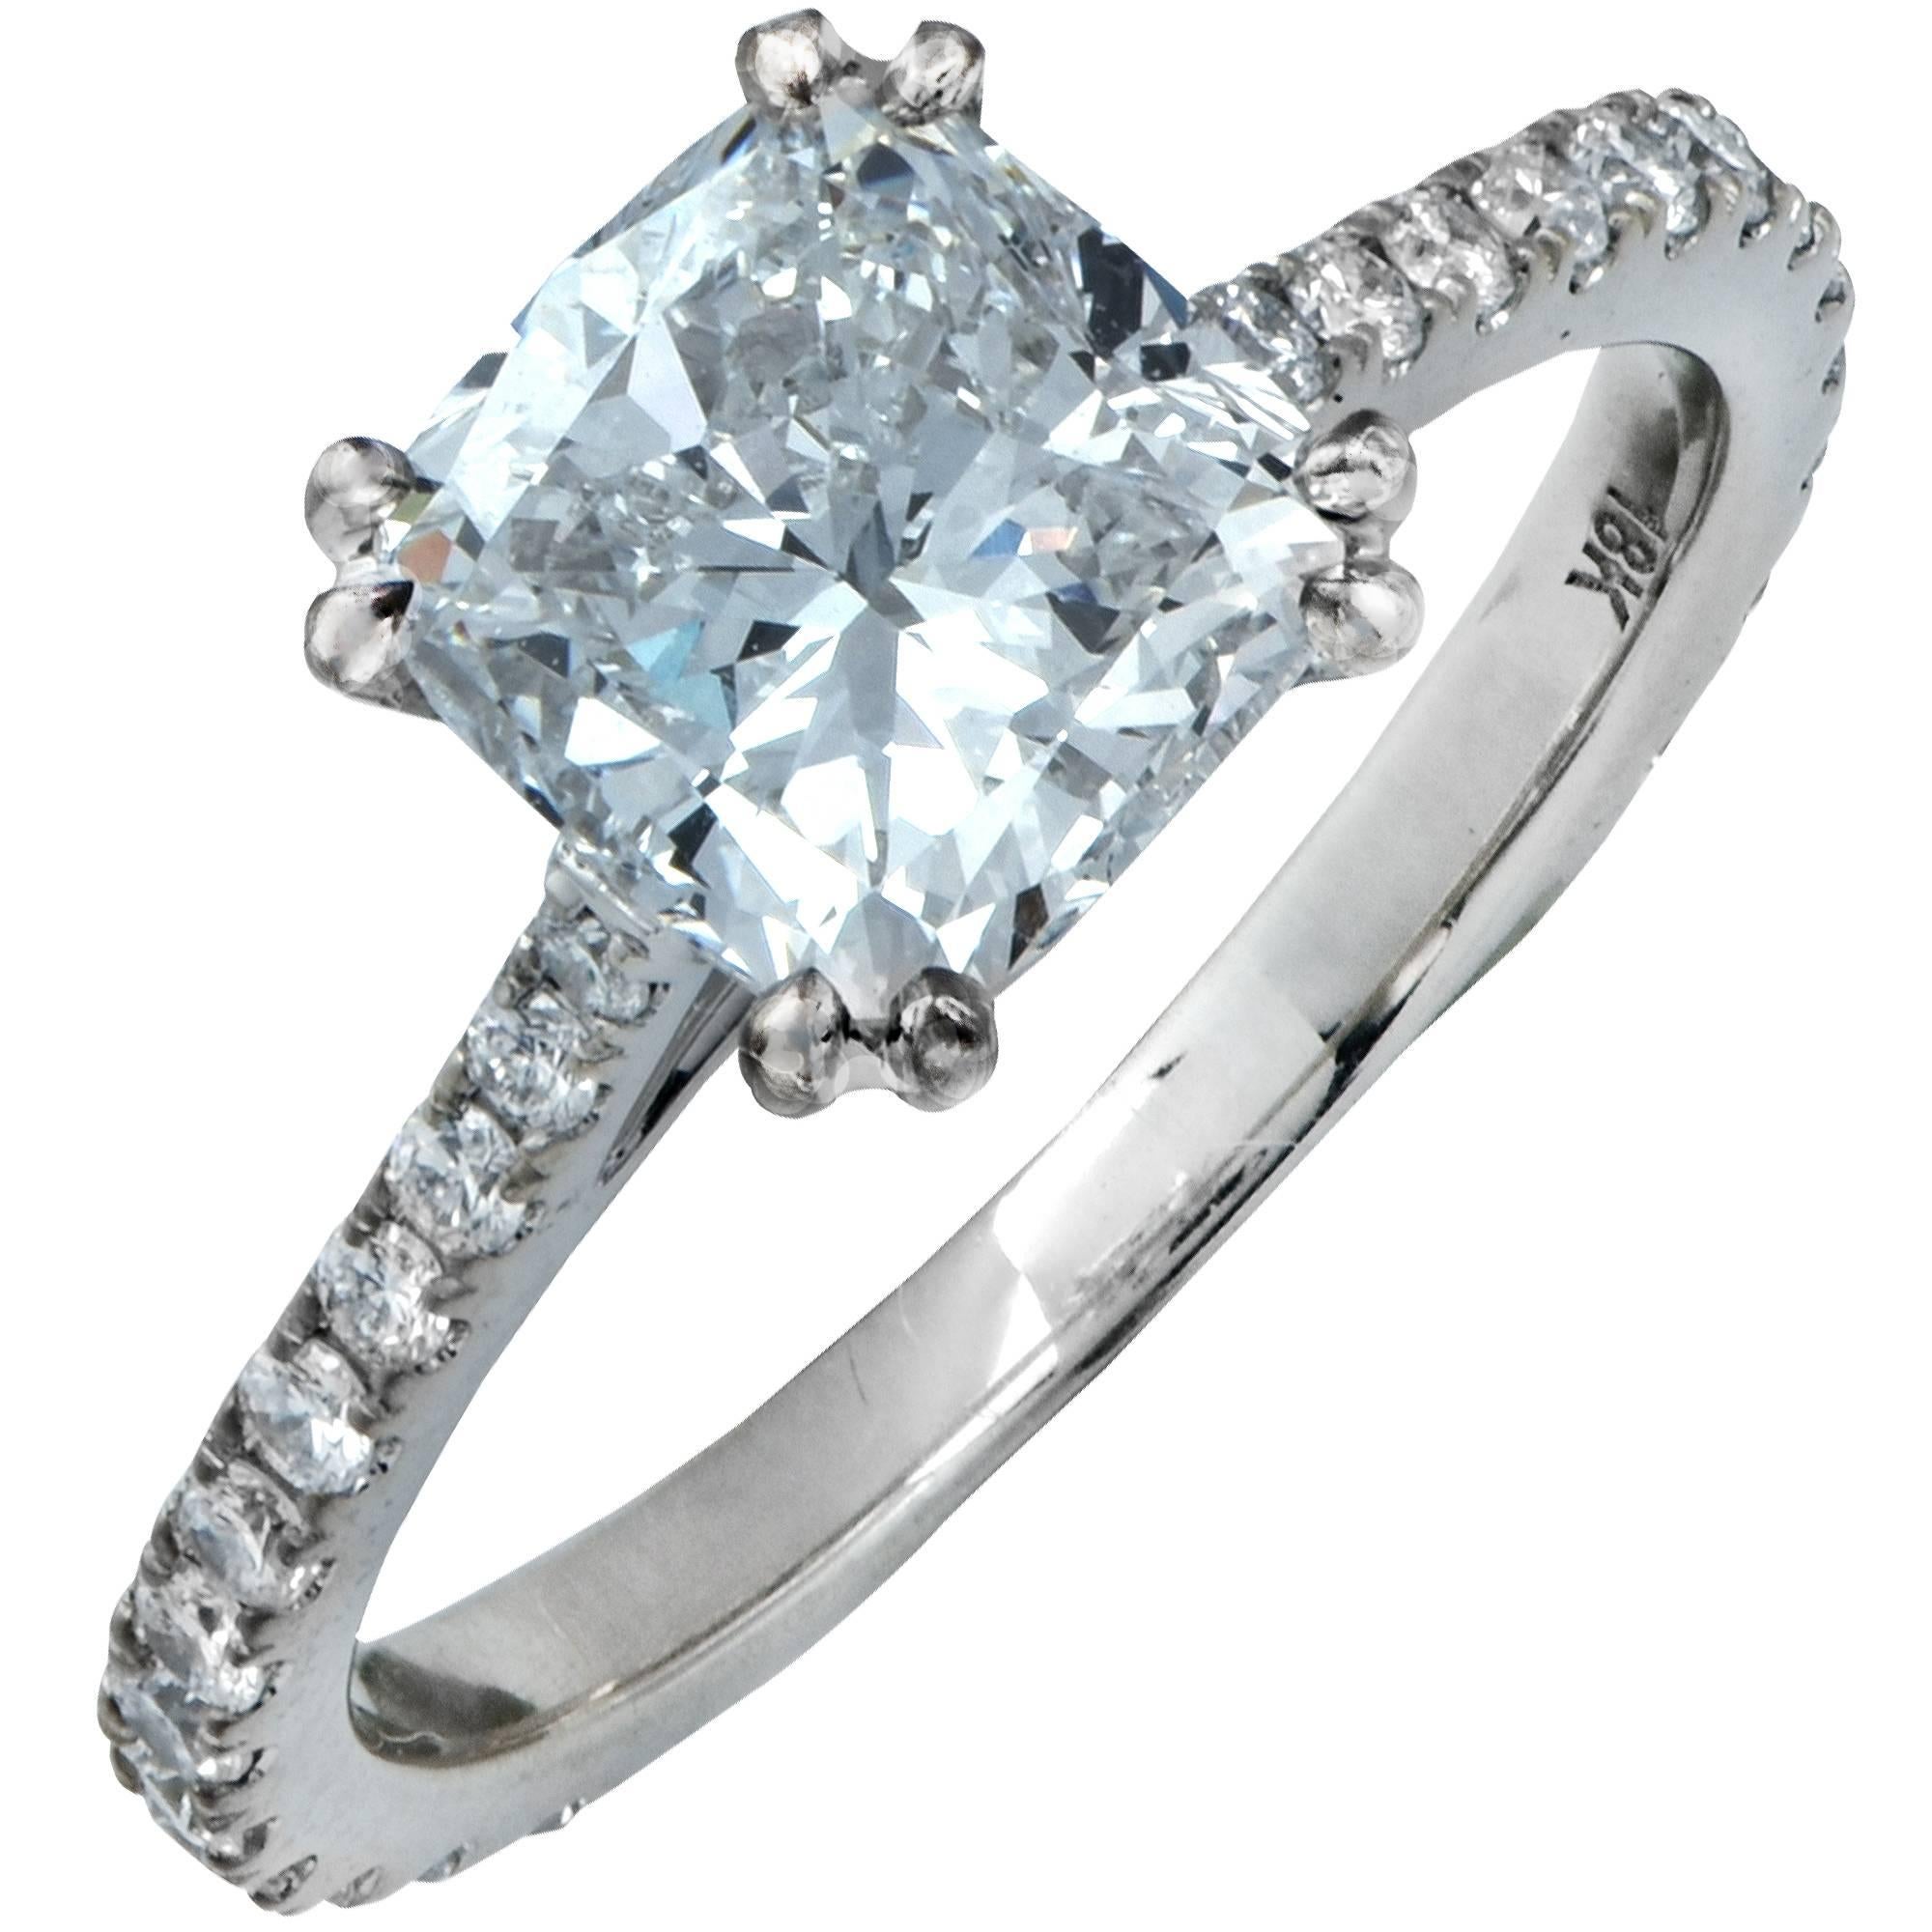 Vivid Diamonds GIA Certified 2.54 Carat Cushion Cut Diamond Engagement Ring